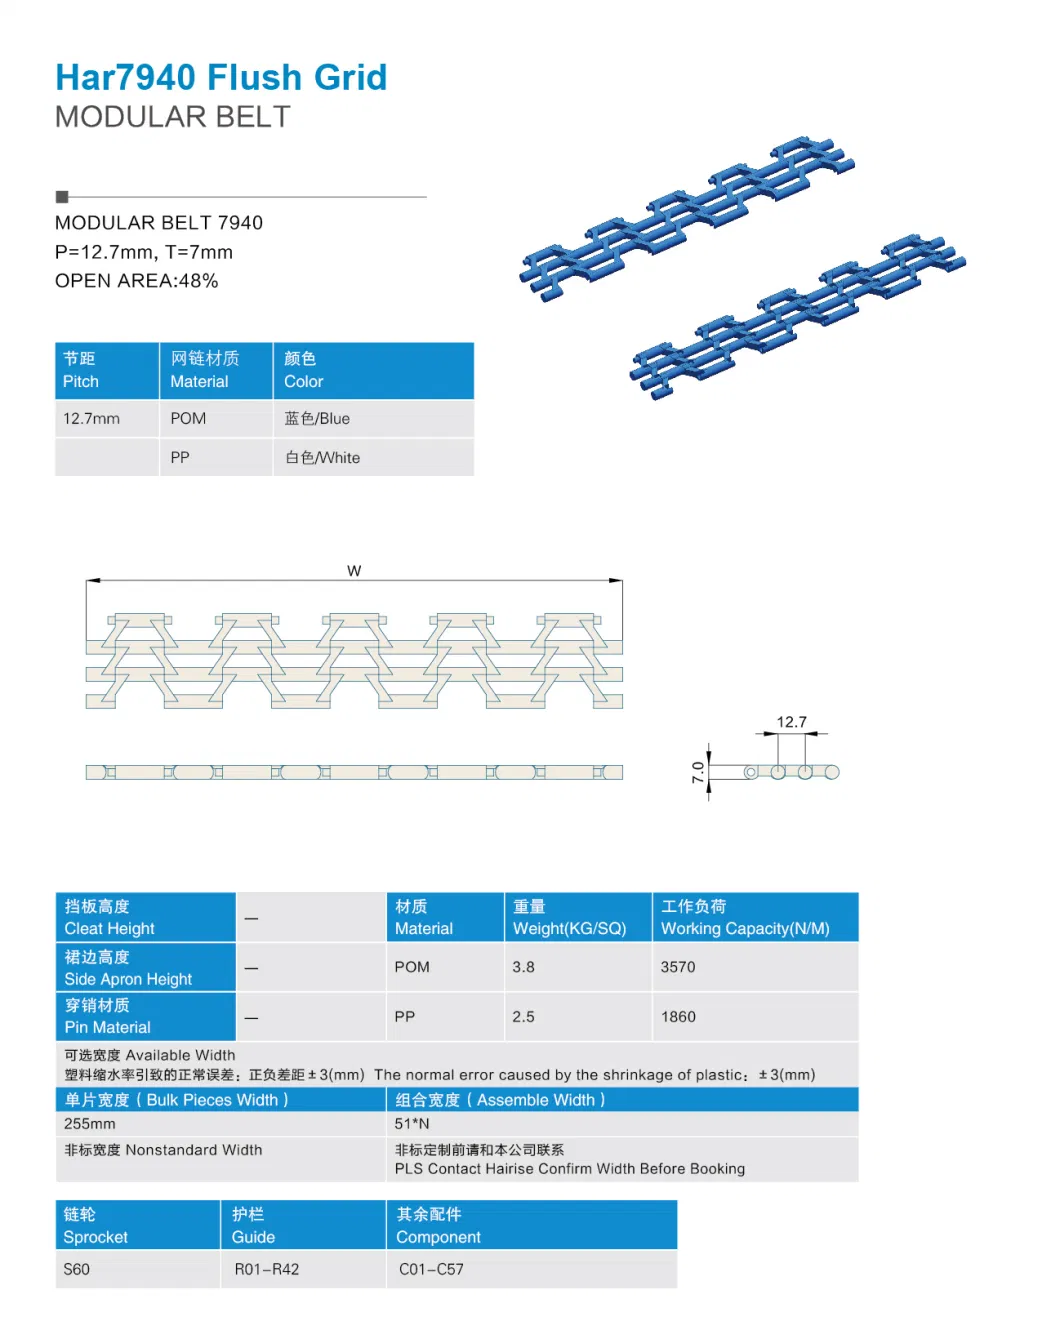 Plastic Modular Conveyor Belt for Food Industry Wtih ISO&amp; CE Certificate